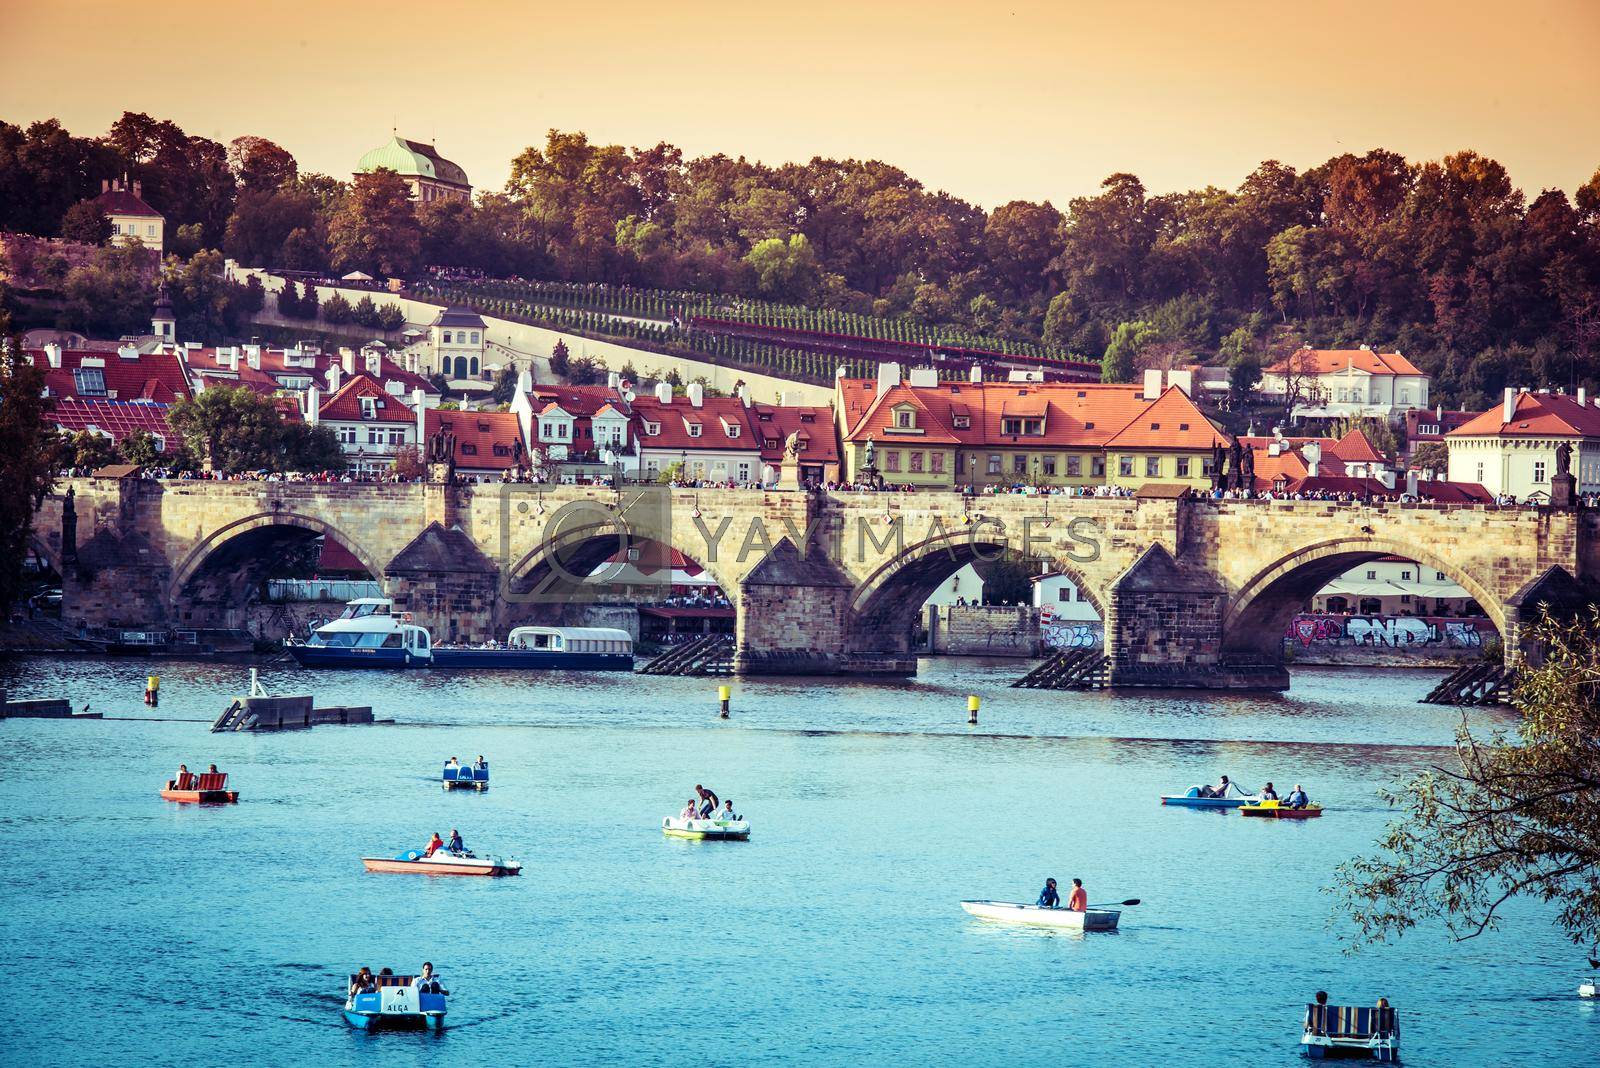 Royalty free image of Charles Bridge and other sights in Prague by GekaSkr